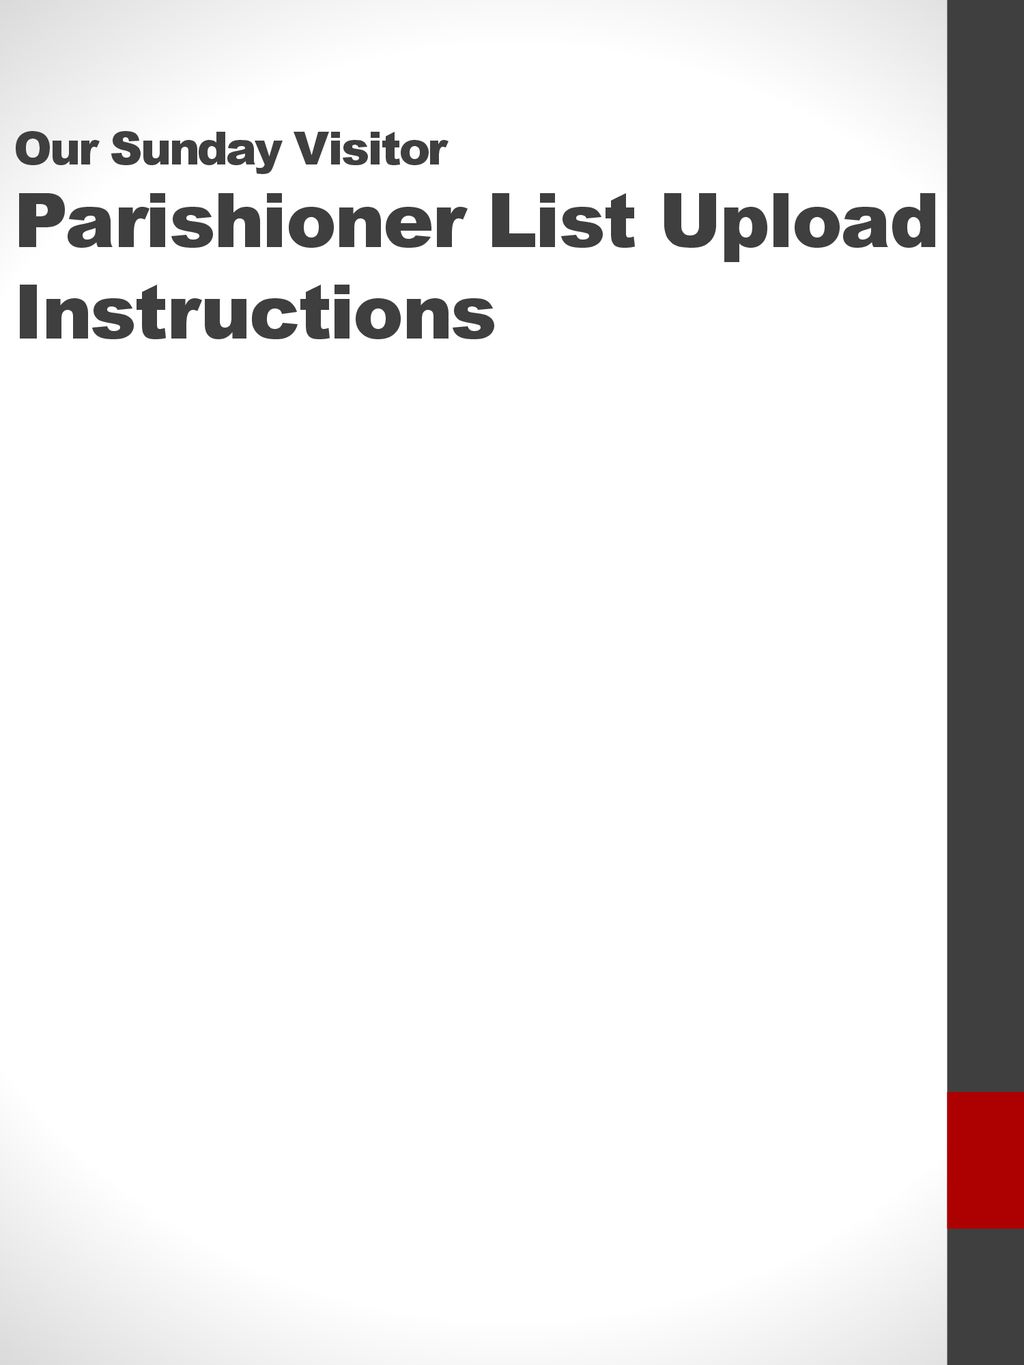 Our Sunday Visitor Parishioner List Upload Instructions